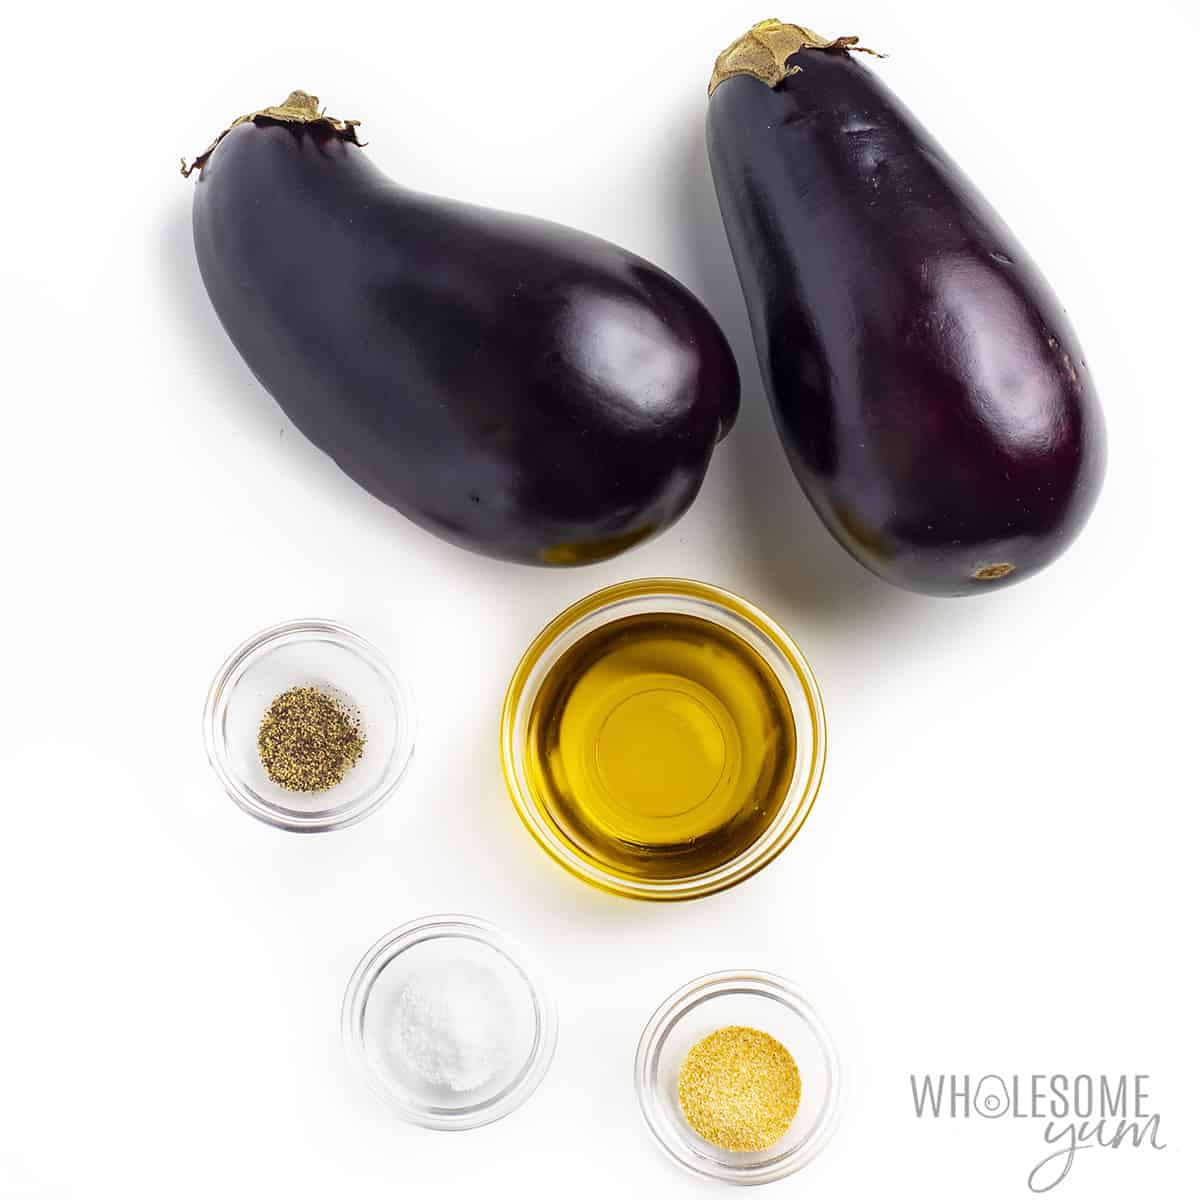 Ingredients for roasting eggplant.